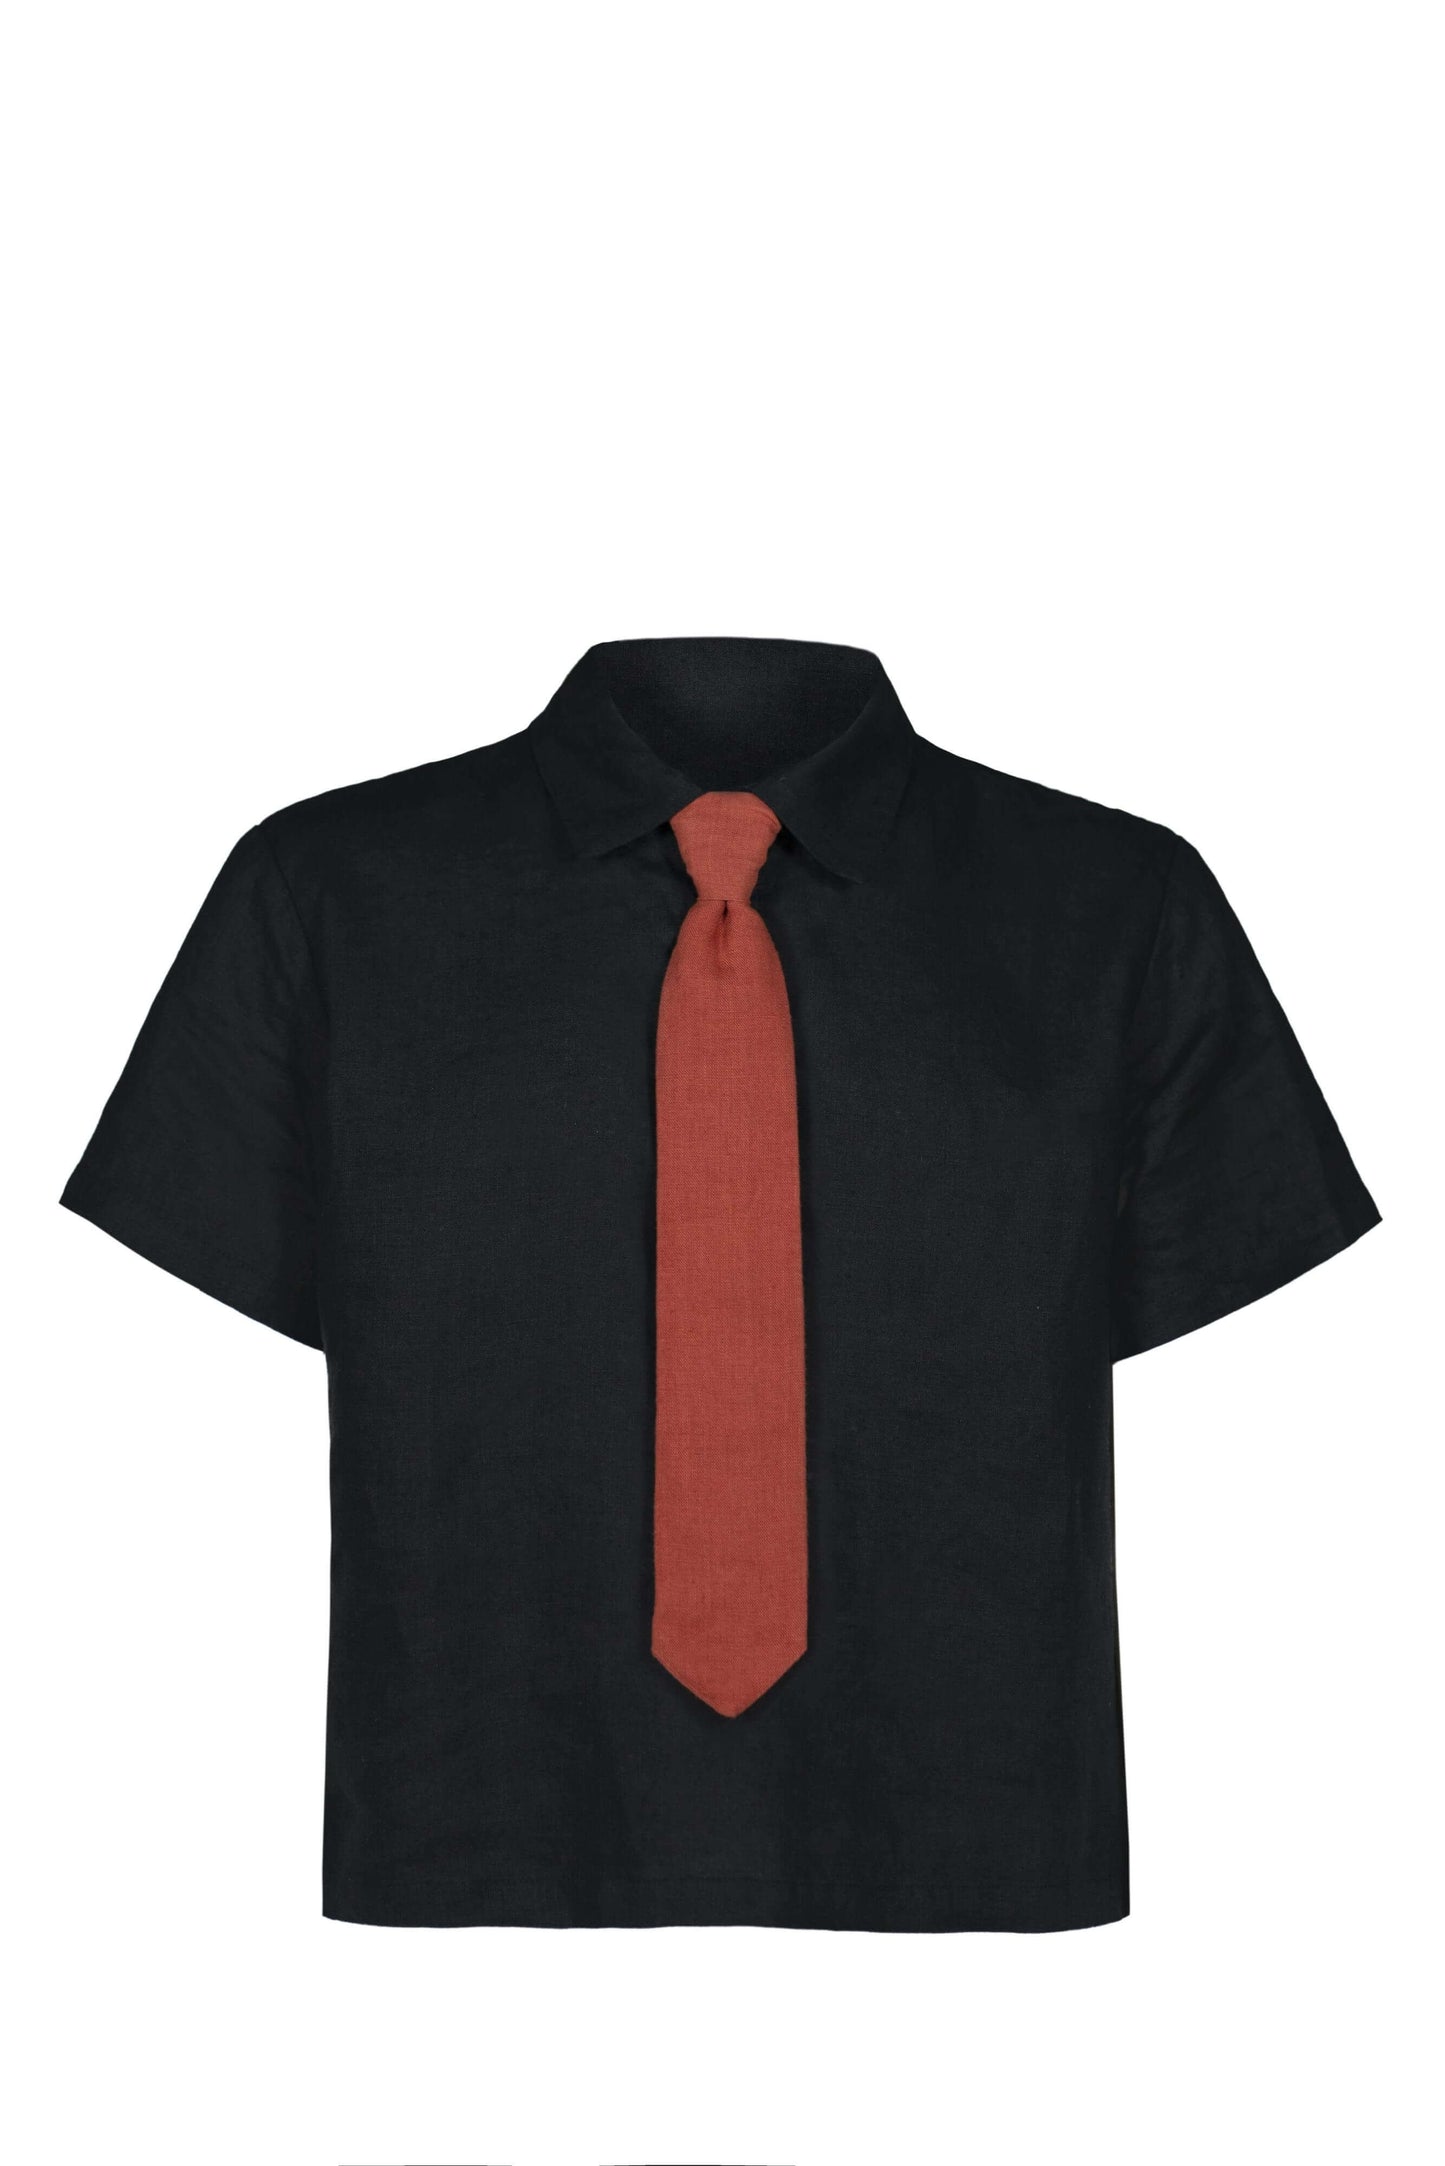 Linen Tie Shirt